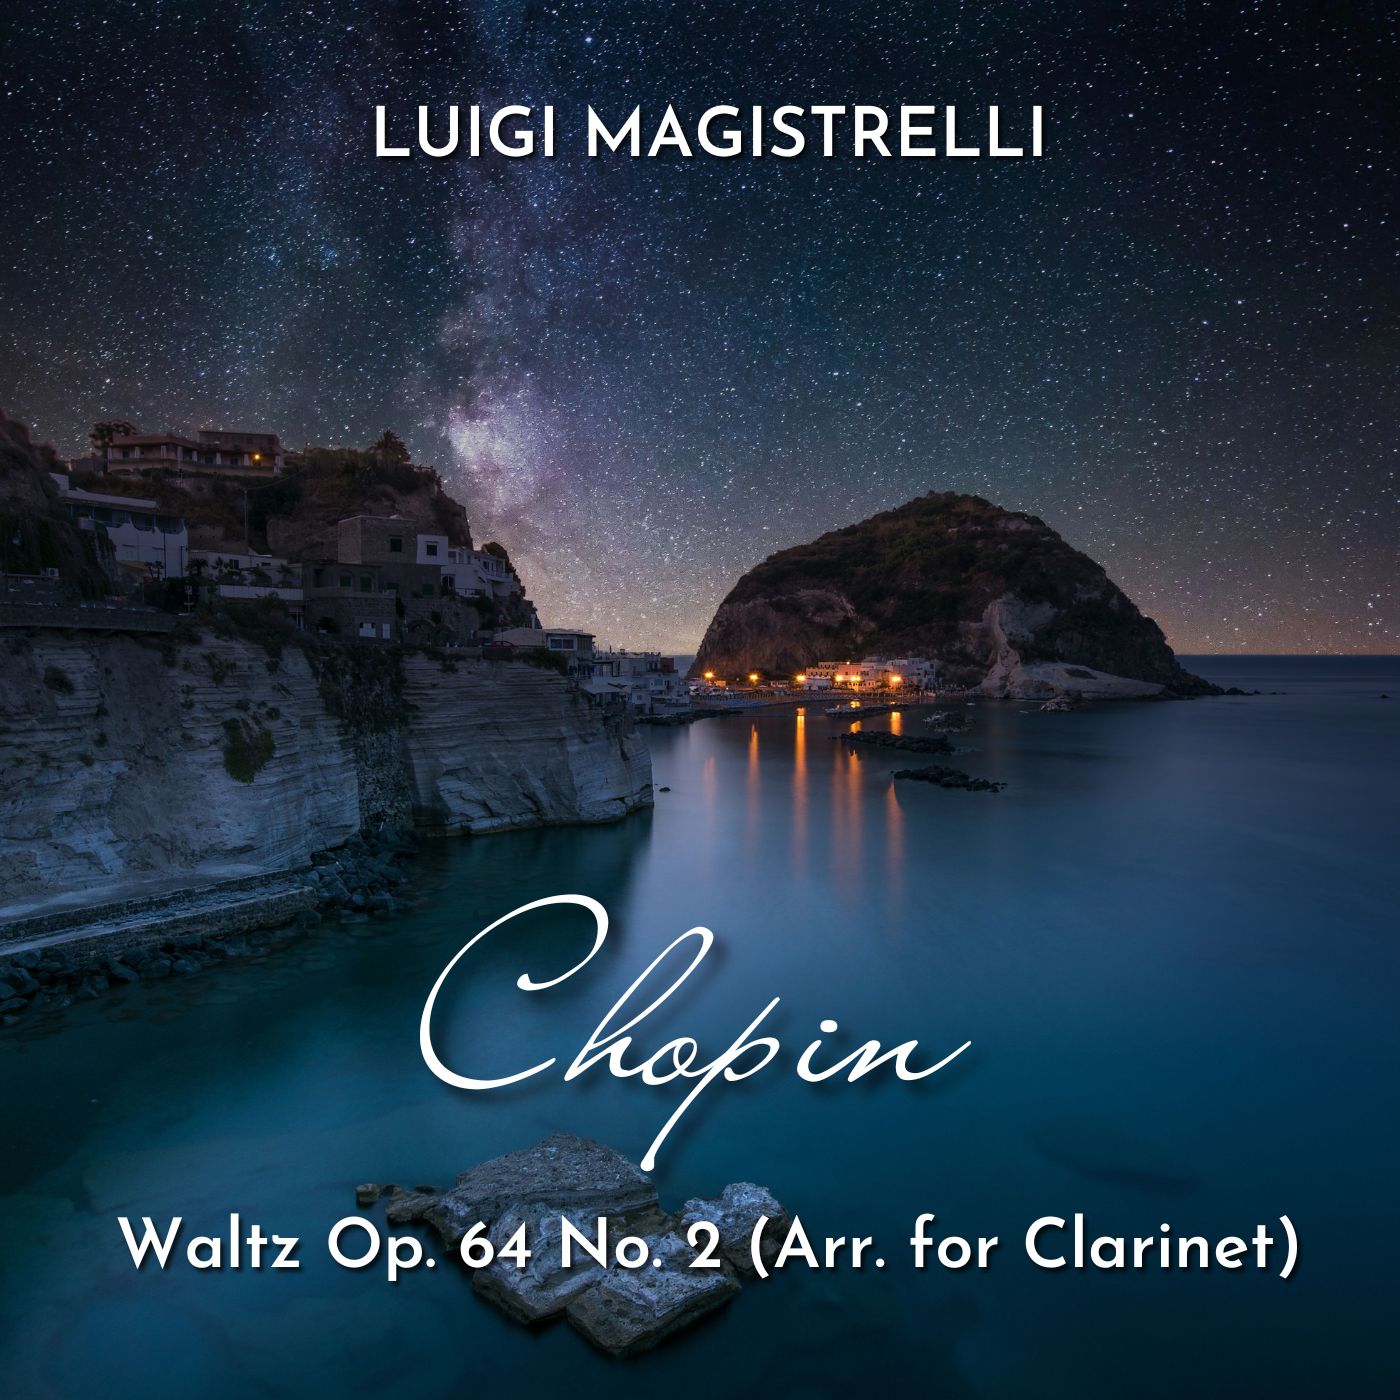 Waltzes, Op. 64: No. 2 in C-sharp Minor, Tempo giusto (Arr. for Clarinet by A. Gabucci)